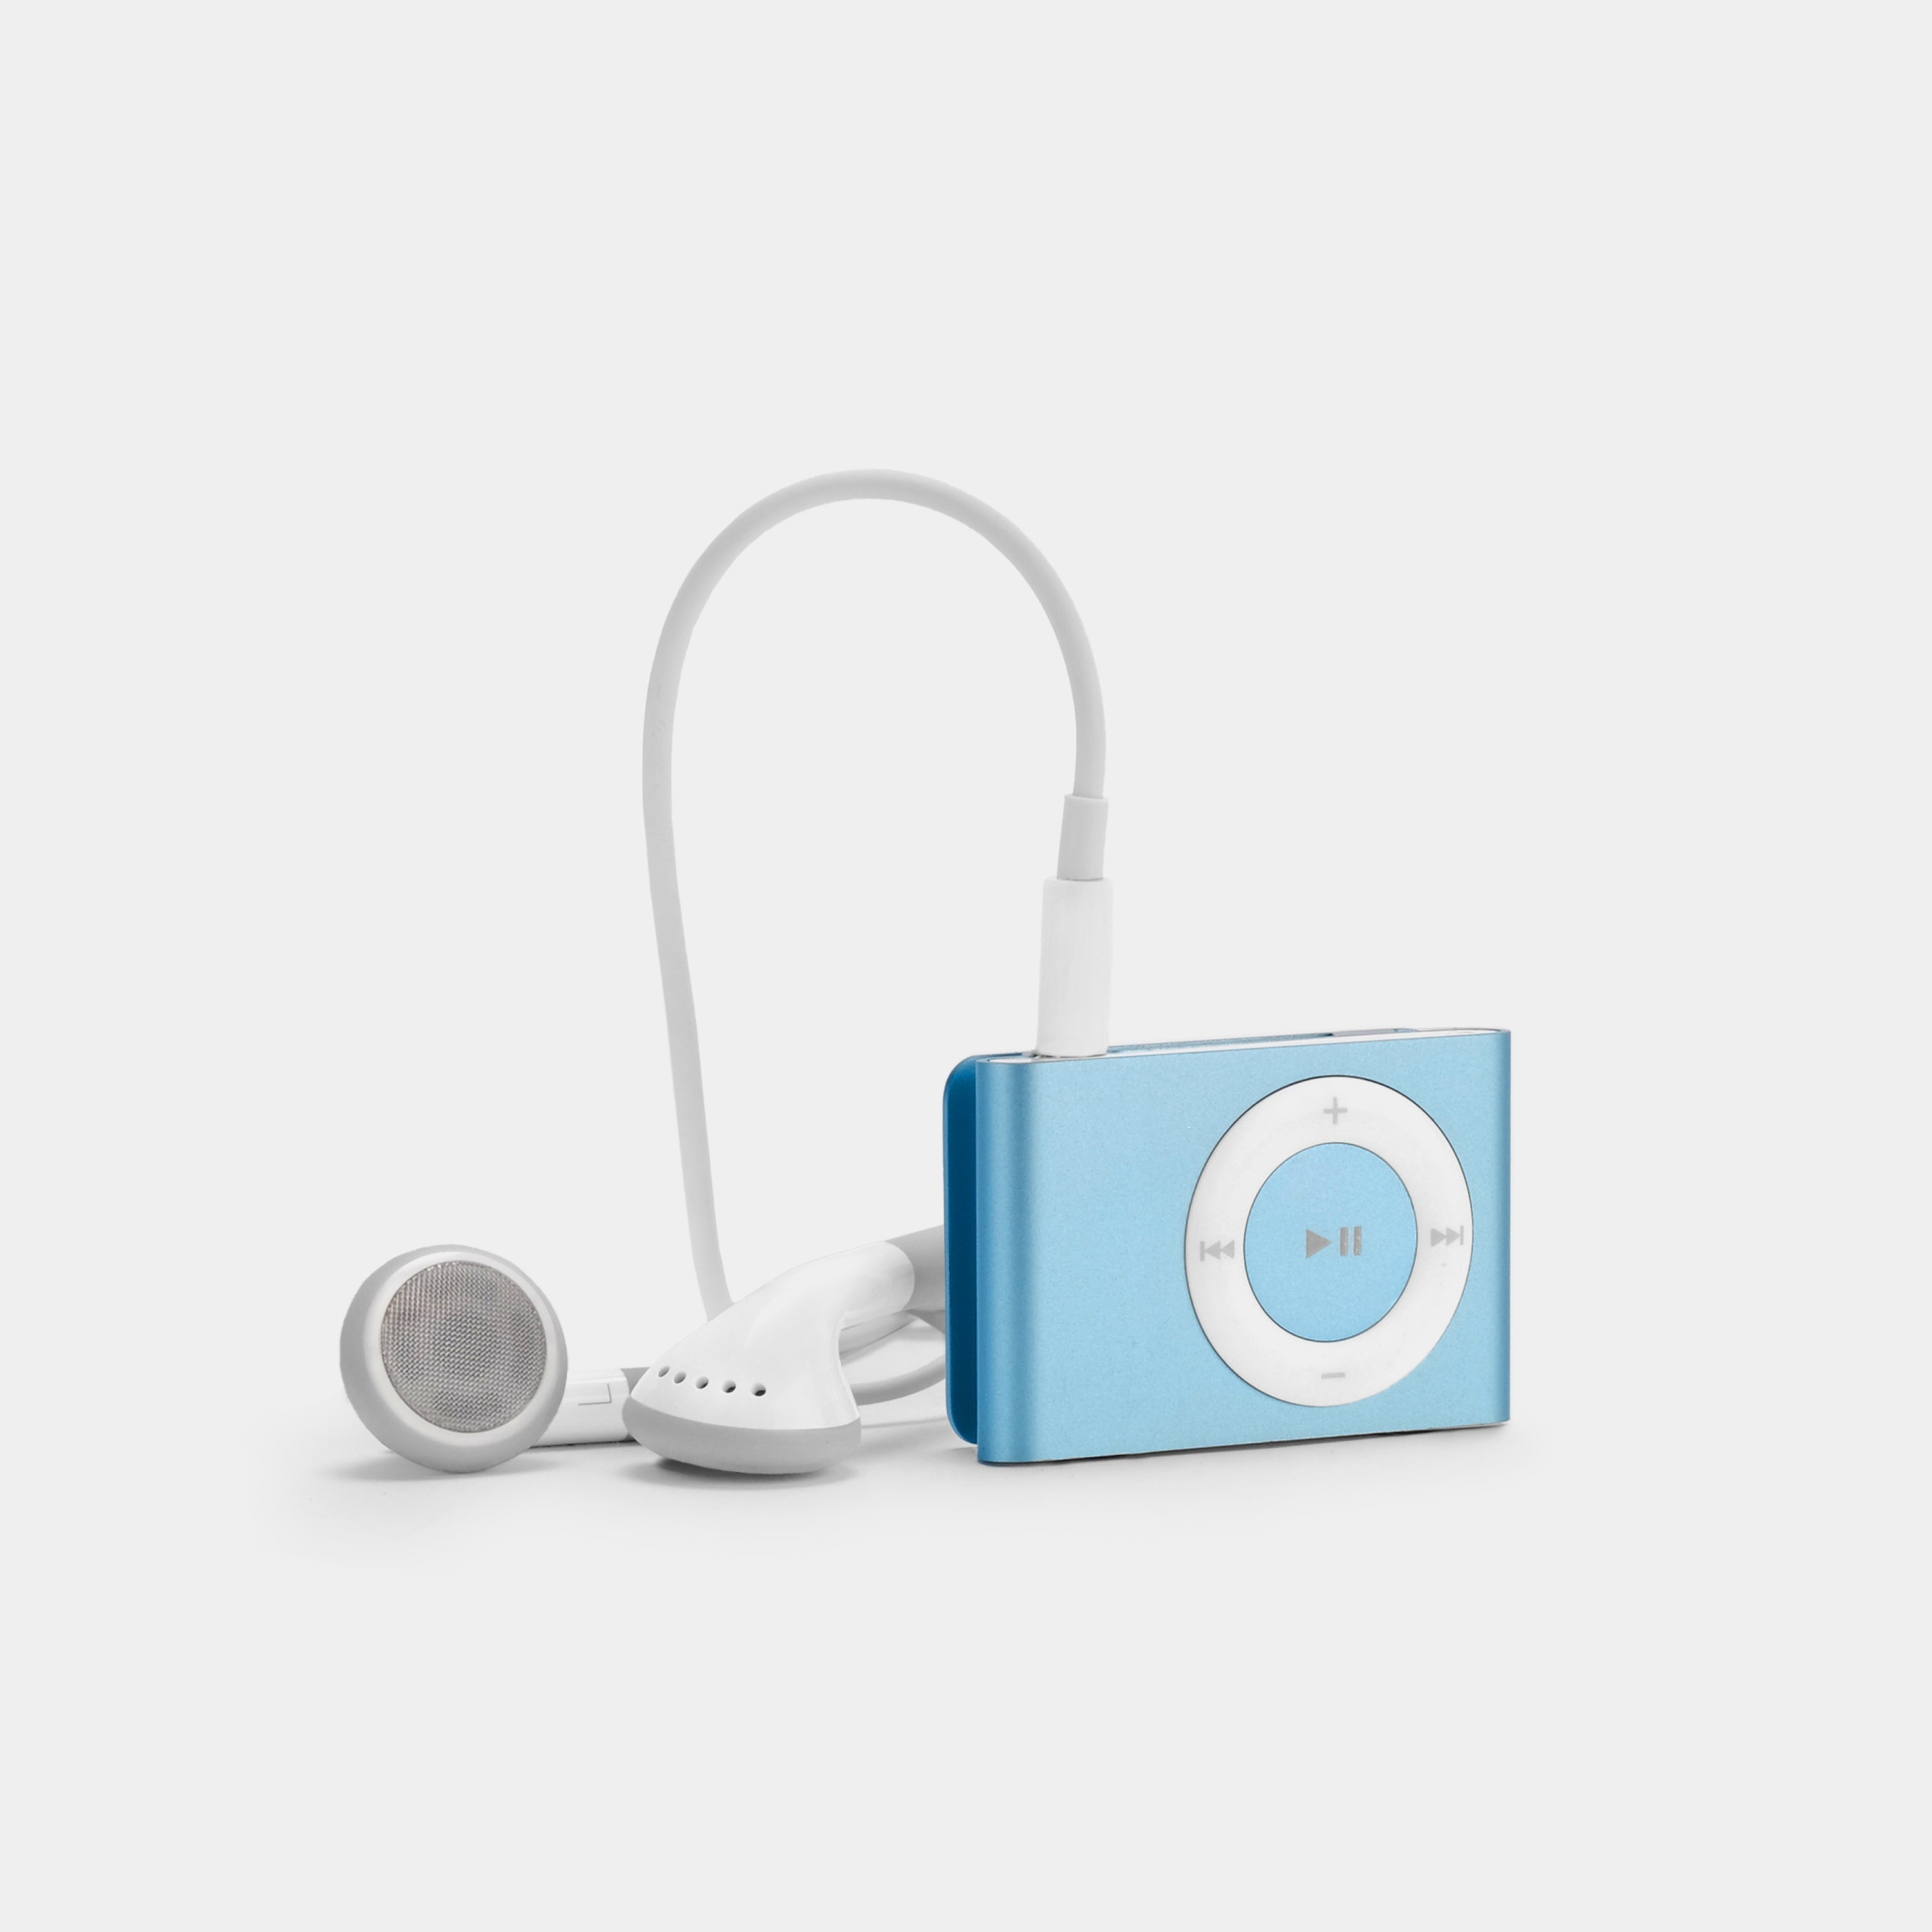 Apple iPod Shuffle (2nd Generation) 1GB MP3 Player - Random Engraving